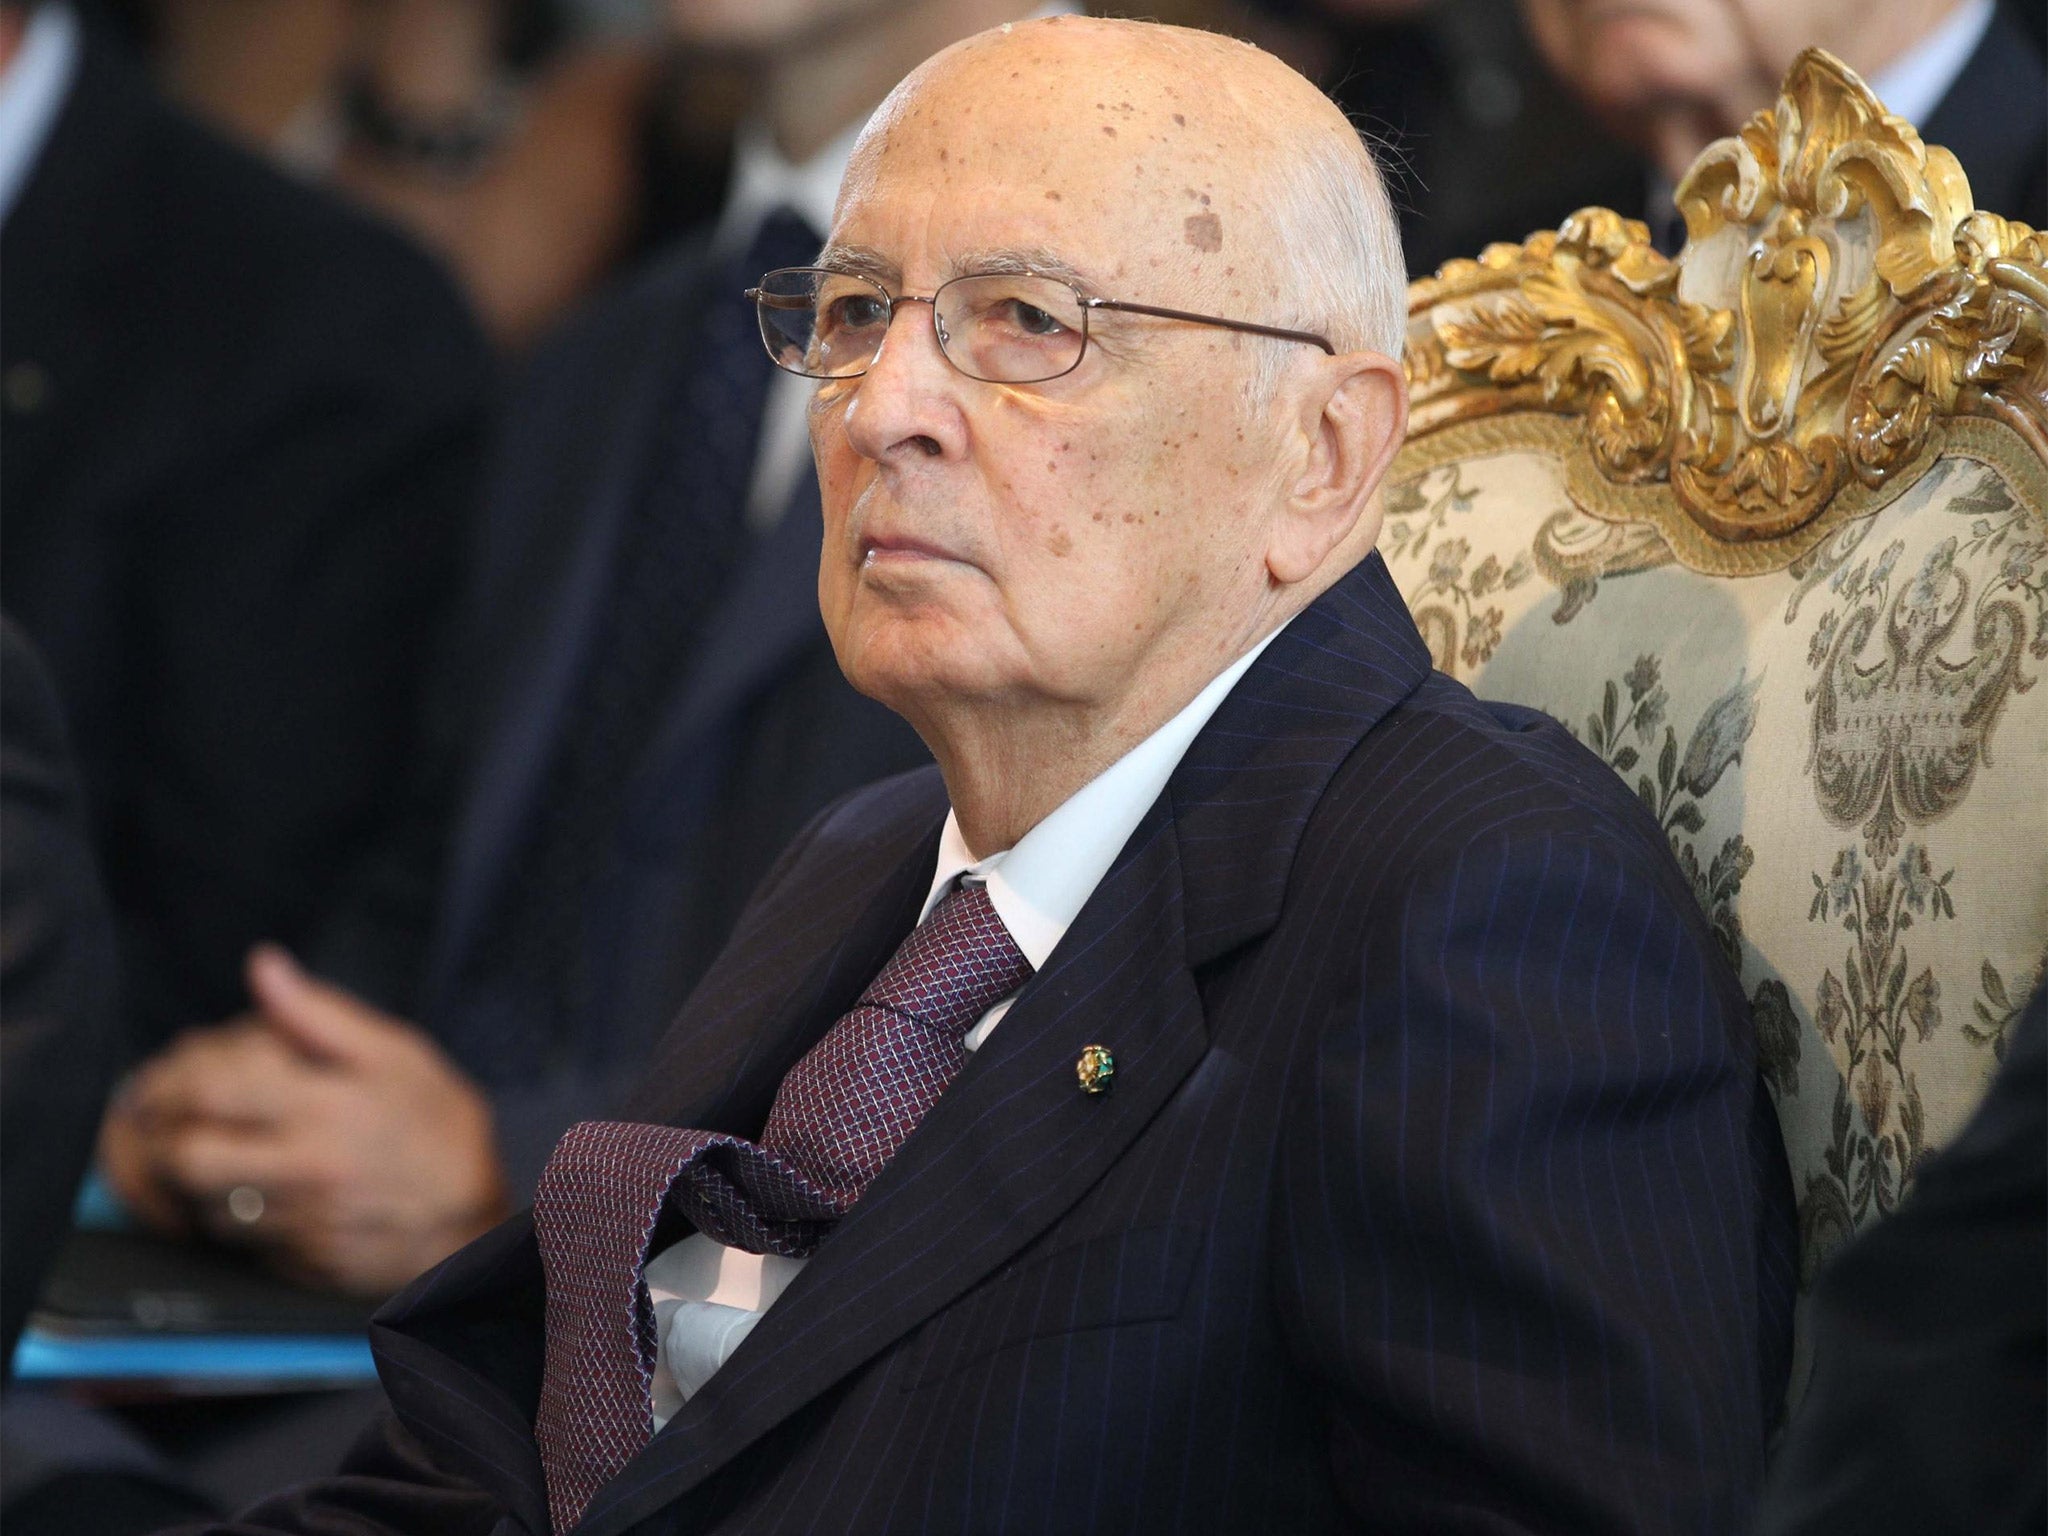 Giorgio Napolitano was Speaker of Italy’s parliament at the time of the Mafia violence